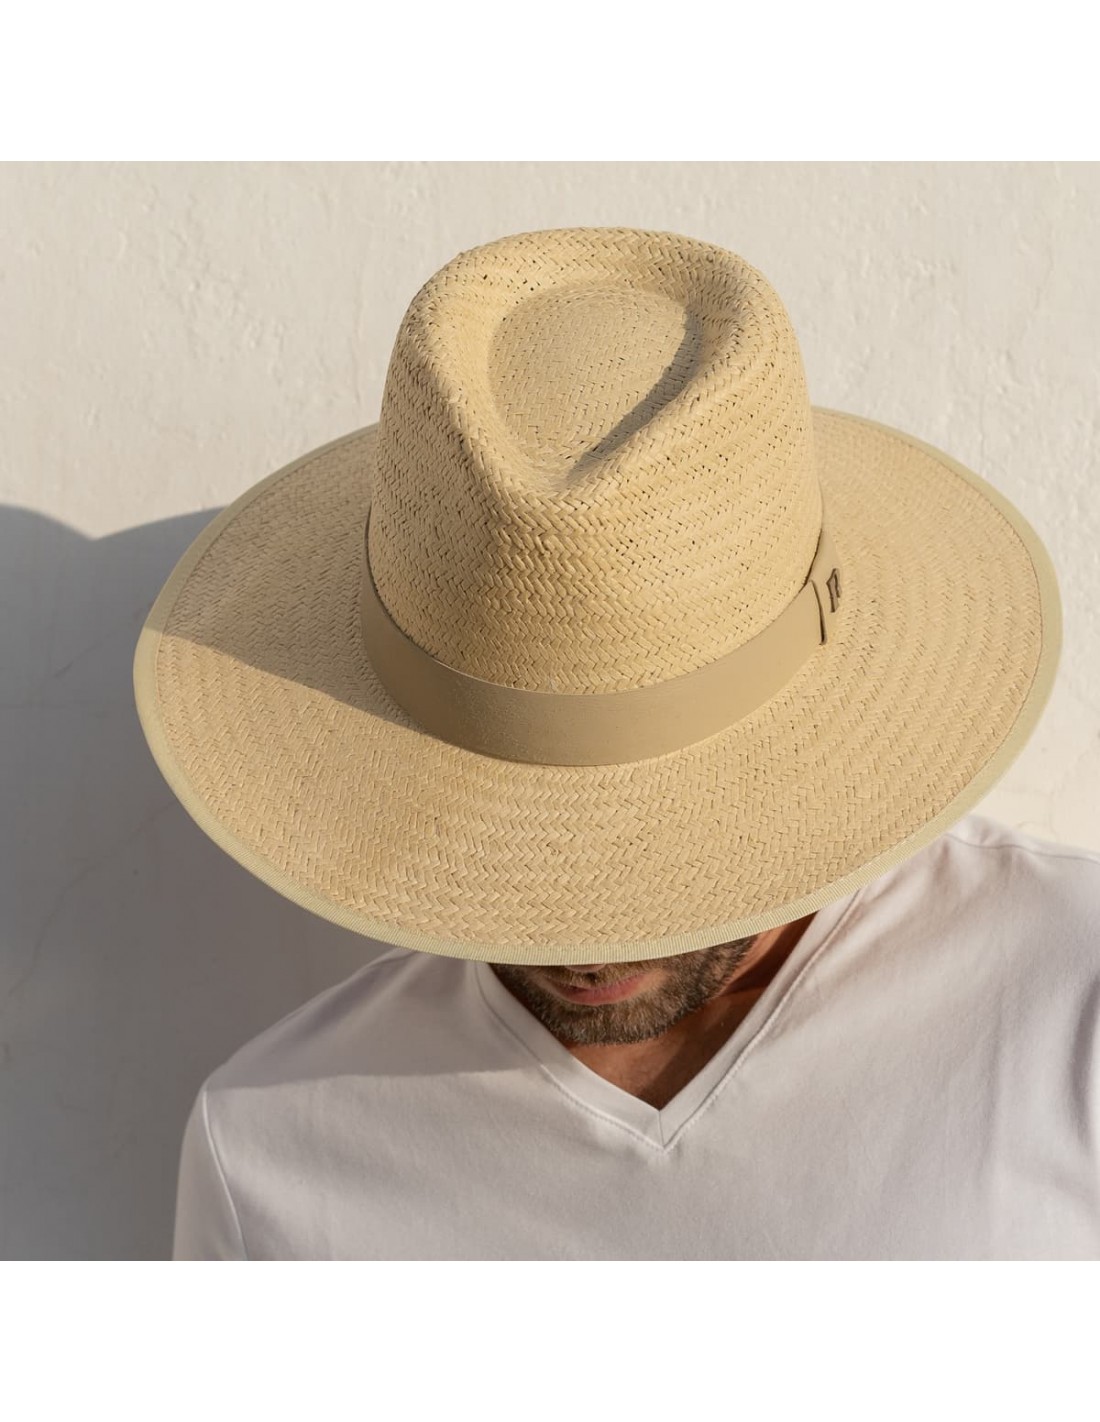 engañar libertad calor Sombrero Paja Florida en color Beige Hombre - Estilo Fedora - Raceu Hats